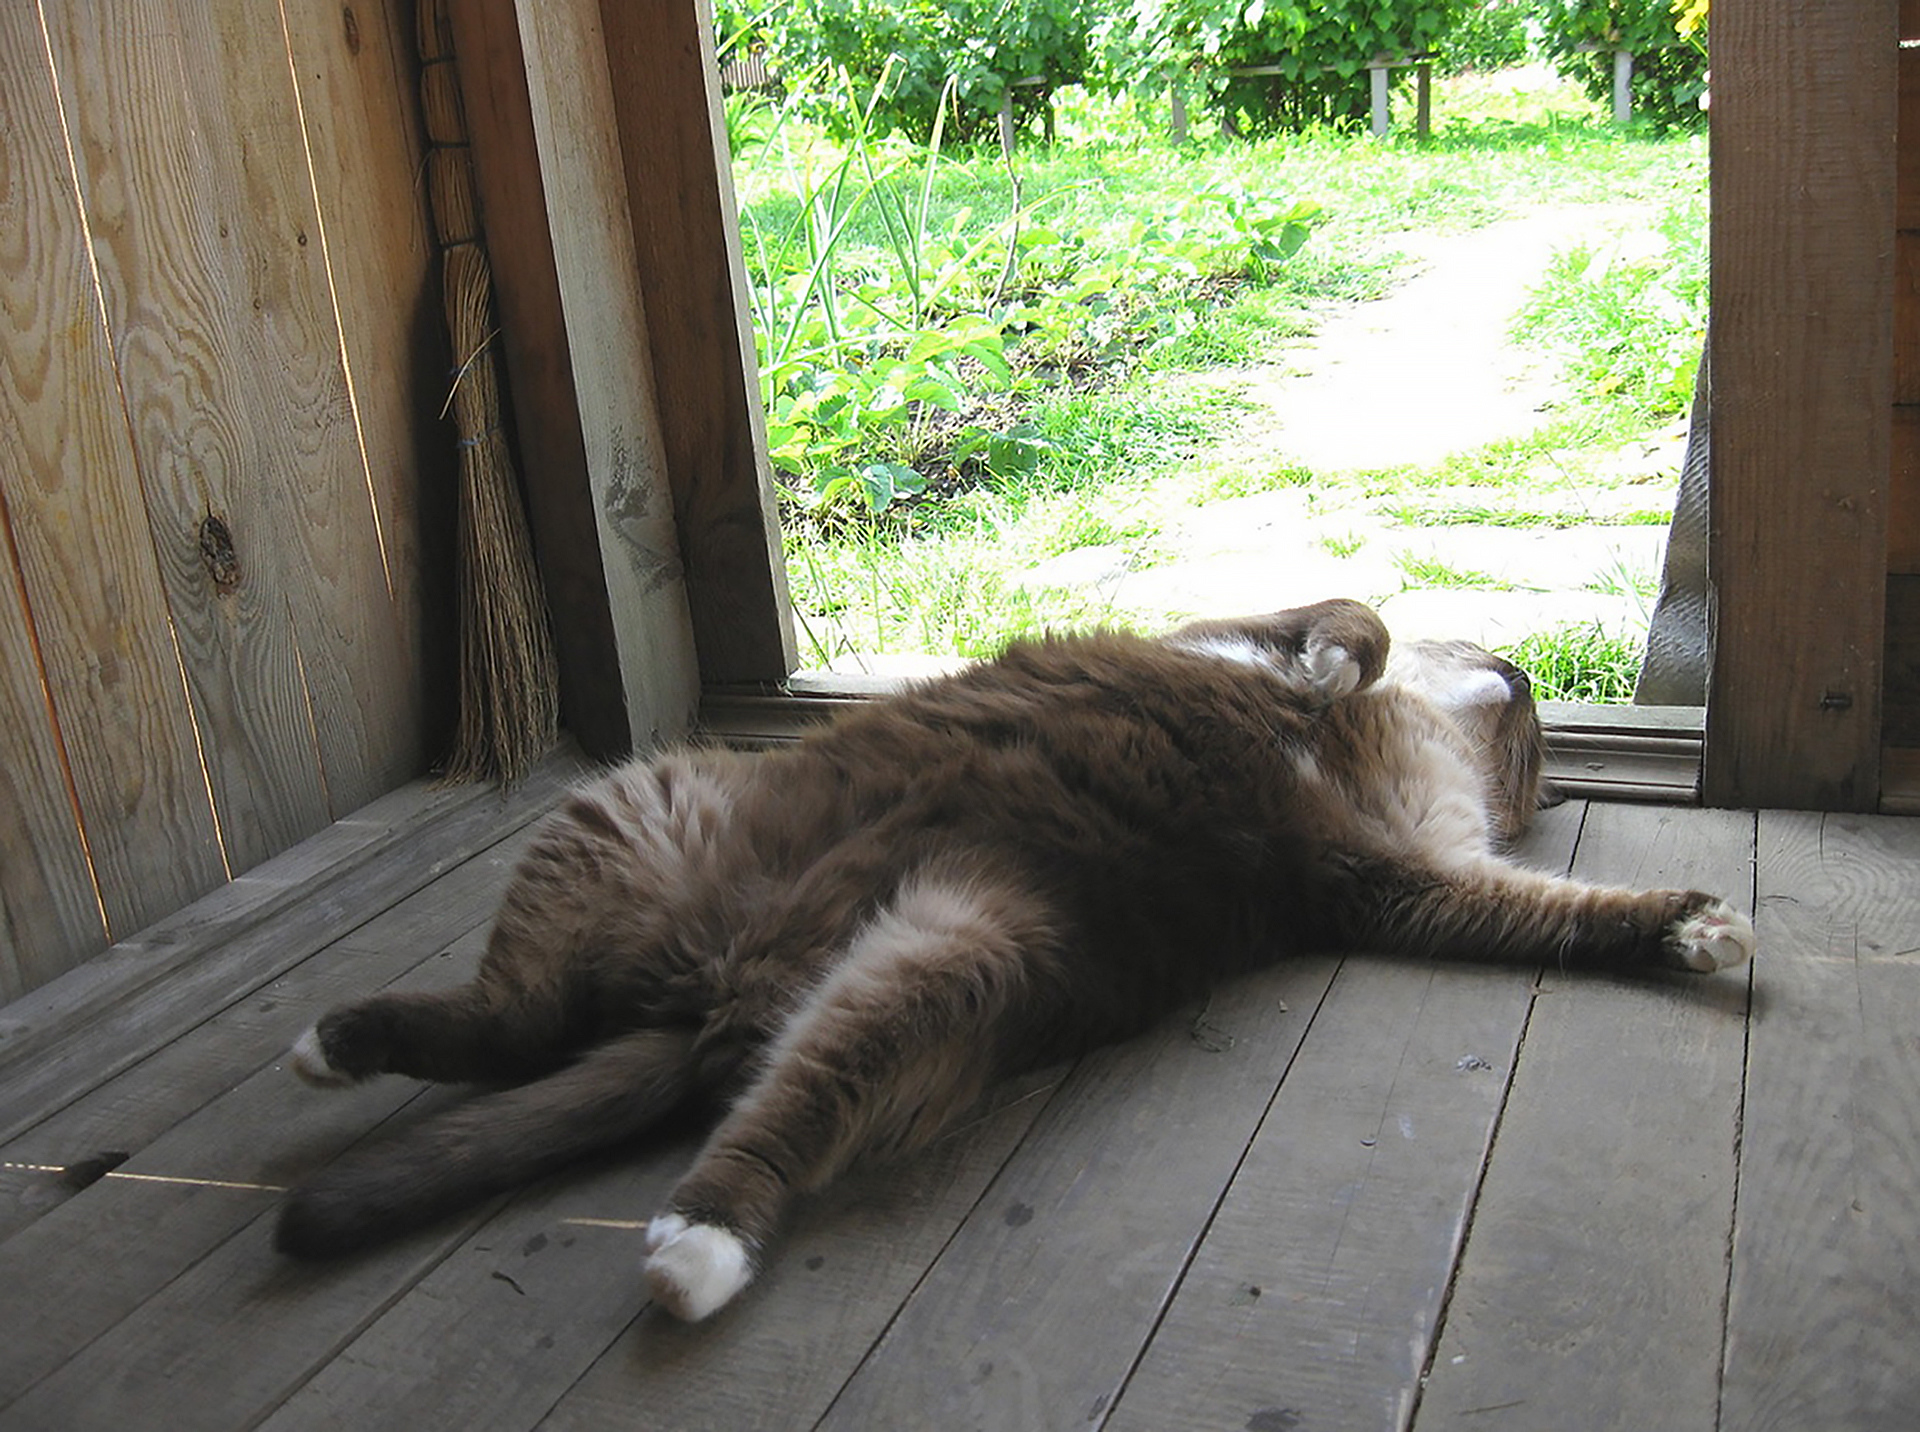 Разбудили видео. Отдыхающий кот. Кот на даче. Кошка отдыхает. Веселый котик летом на даче.